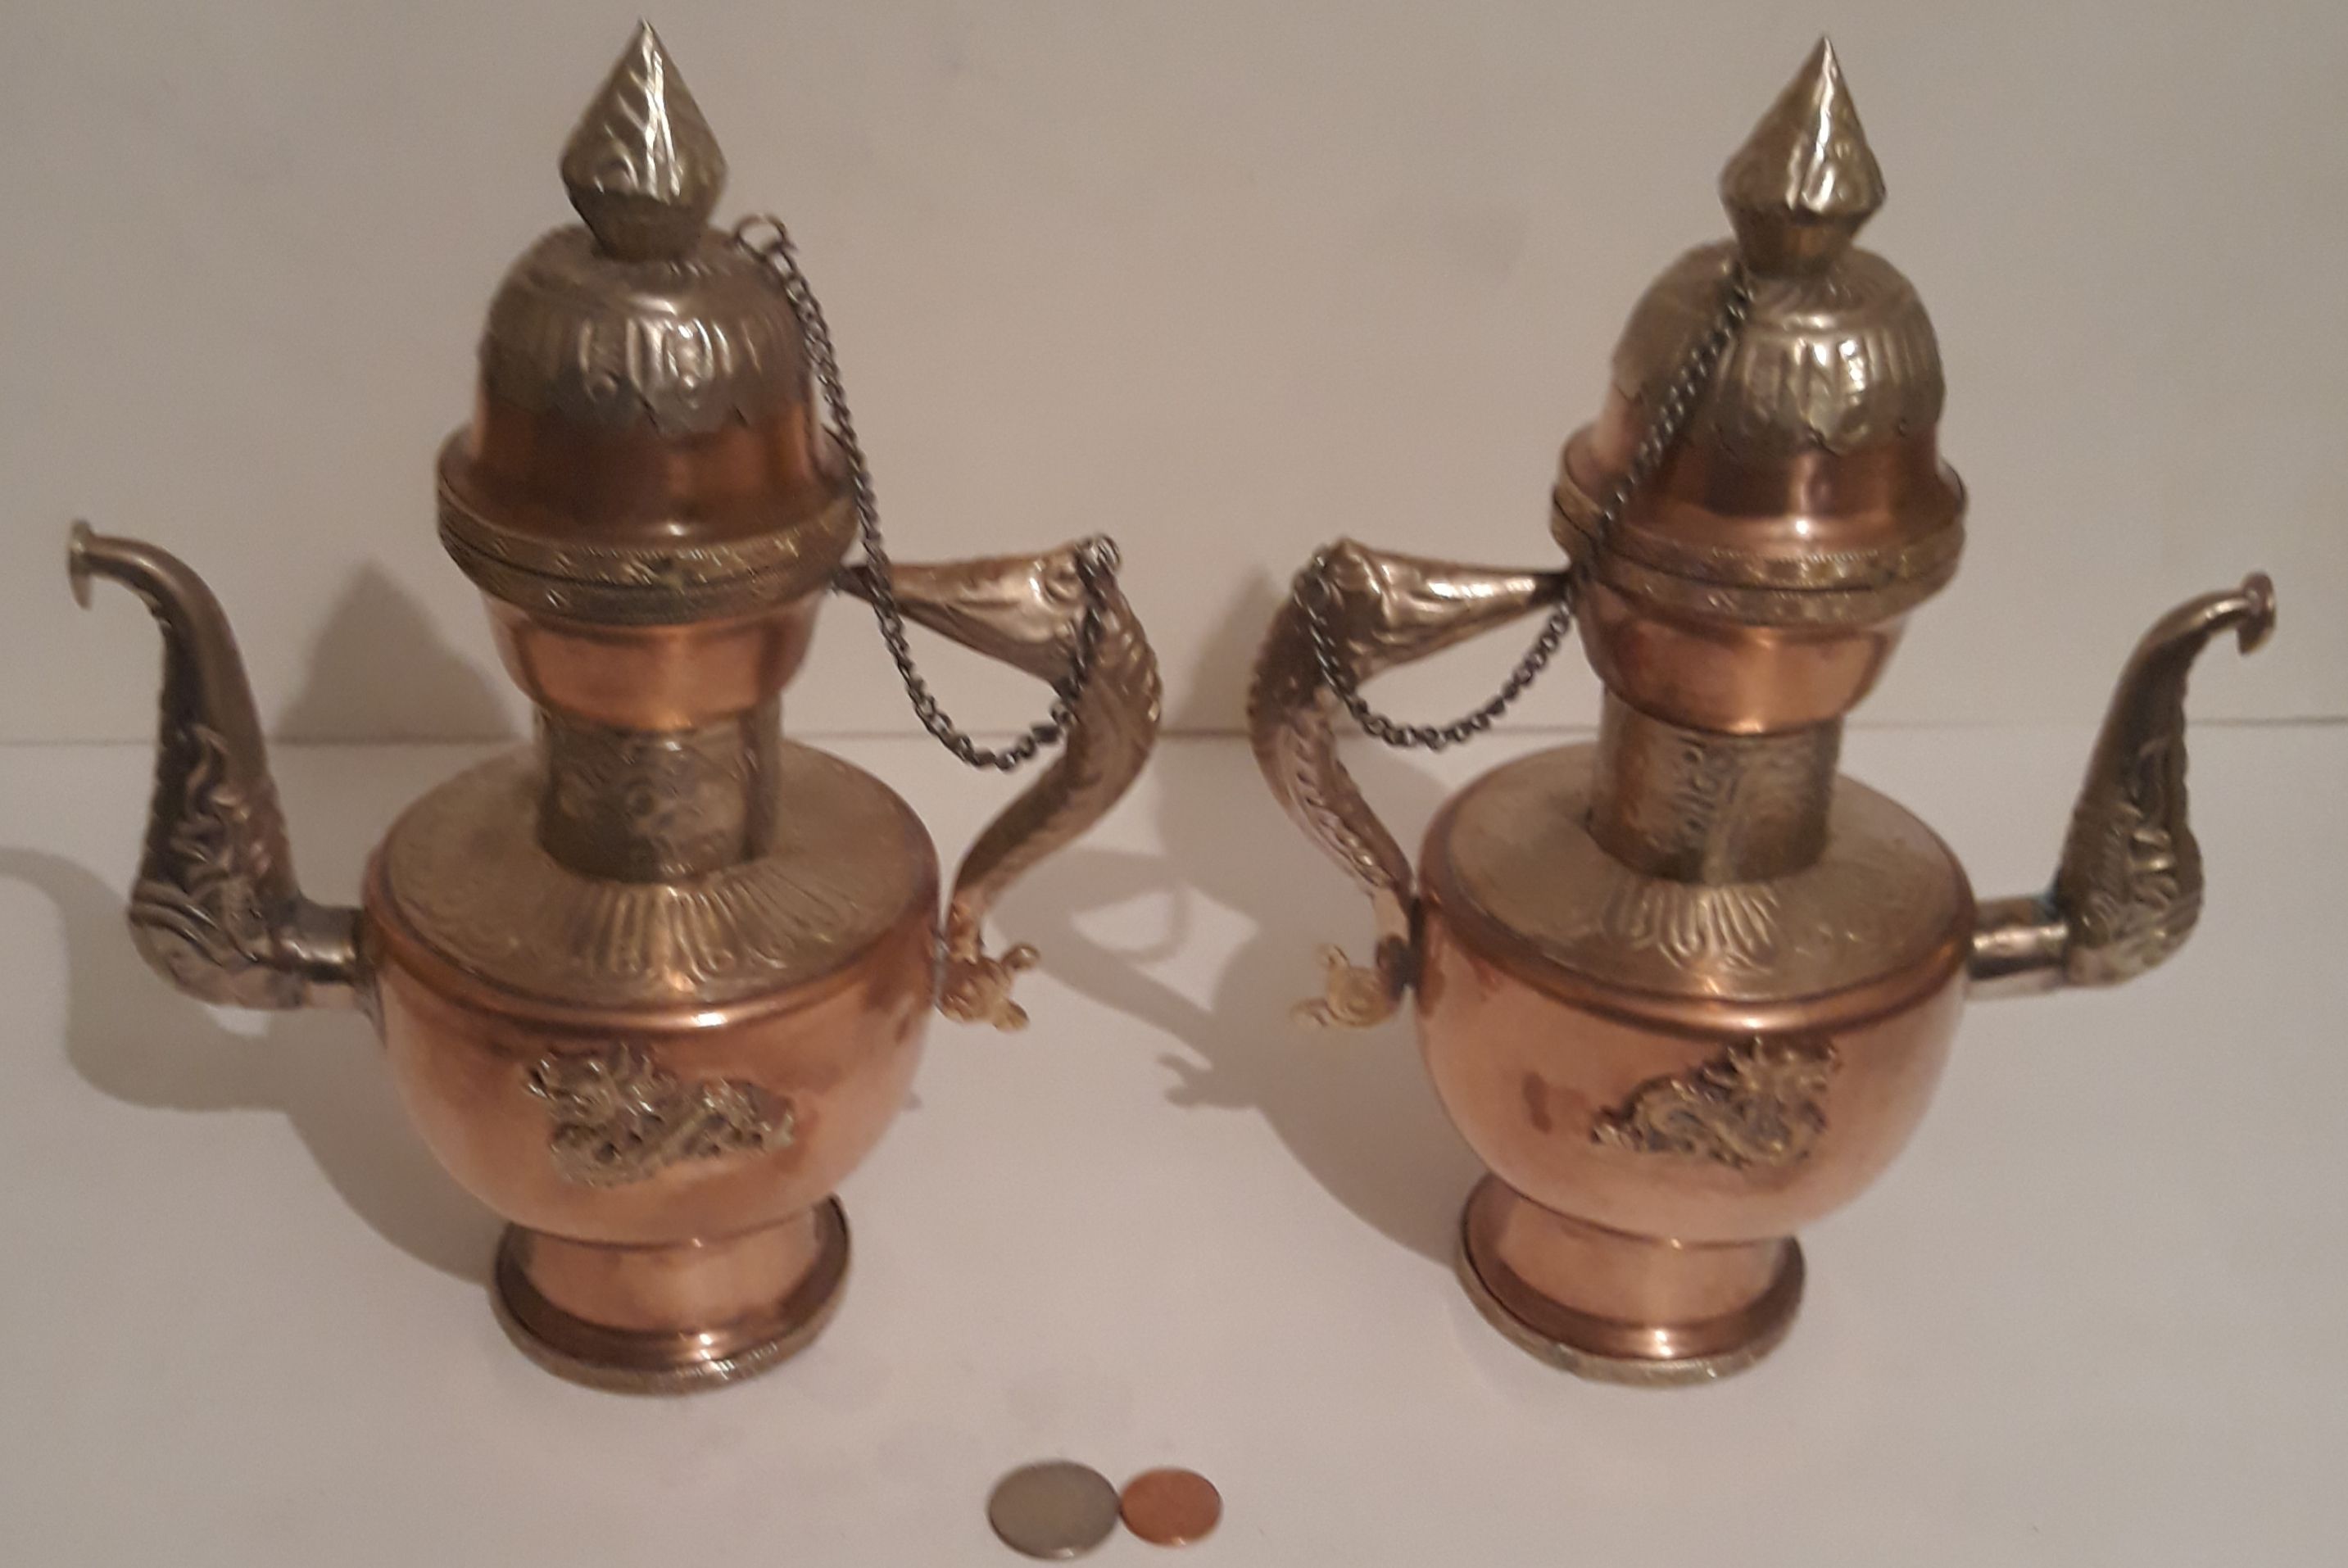 Vintage Set of 2 Metal Copper, Brass and Silver Tea Pots Set, 10" Tall, Dragons, Kitchen Decor, Table Decor, Shelf Display